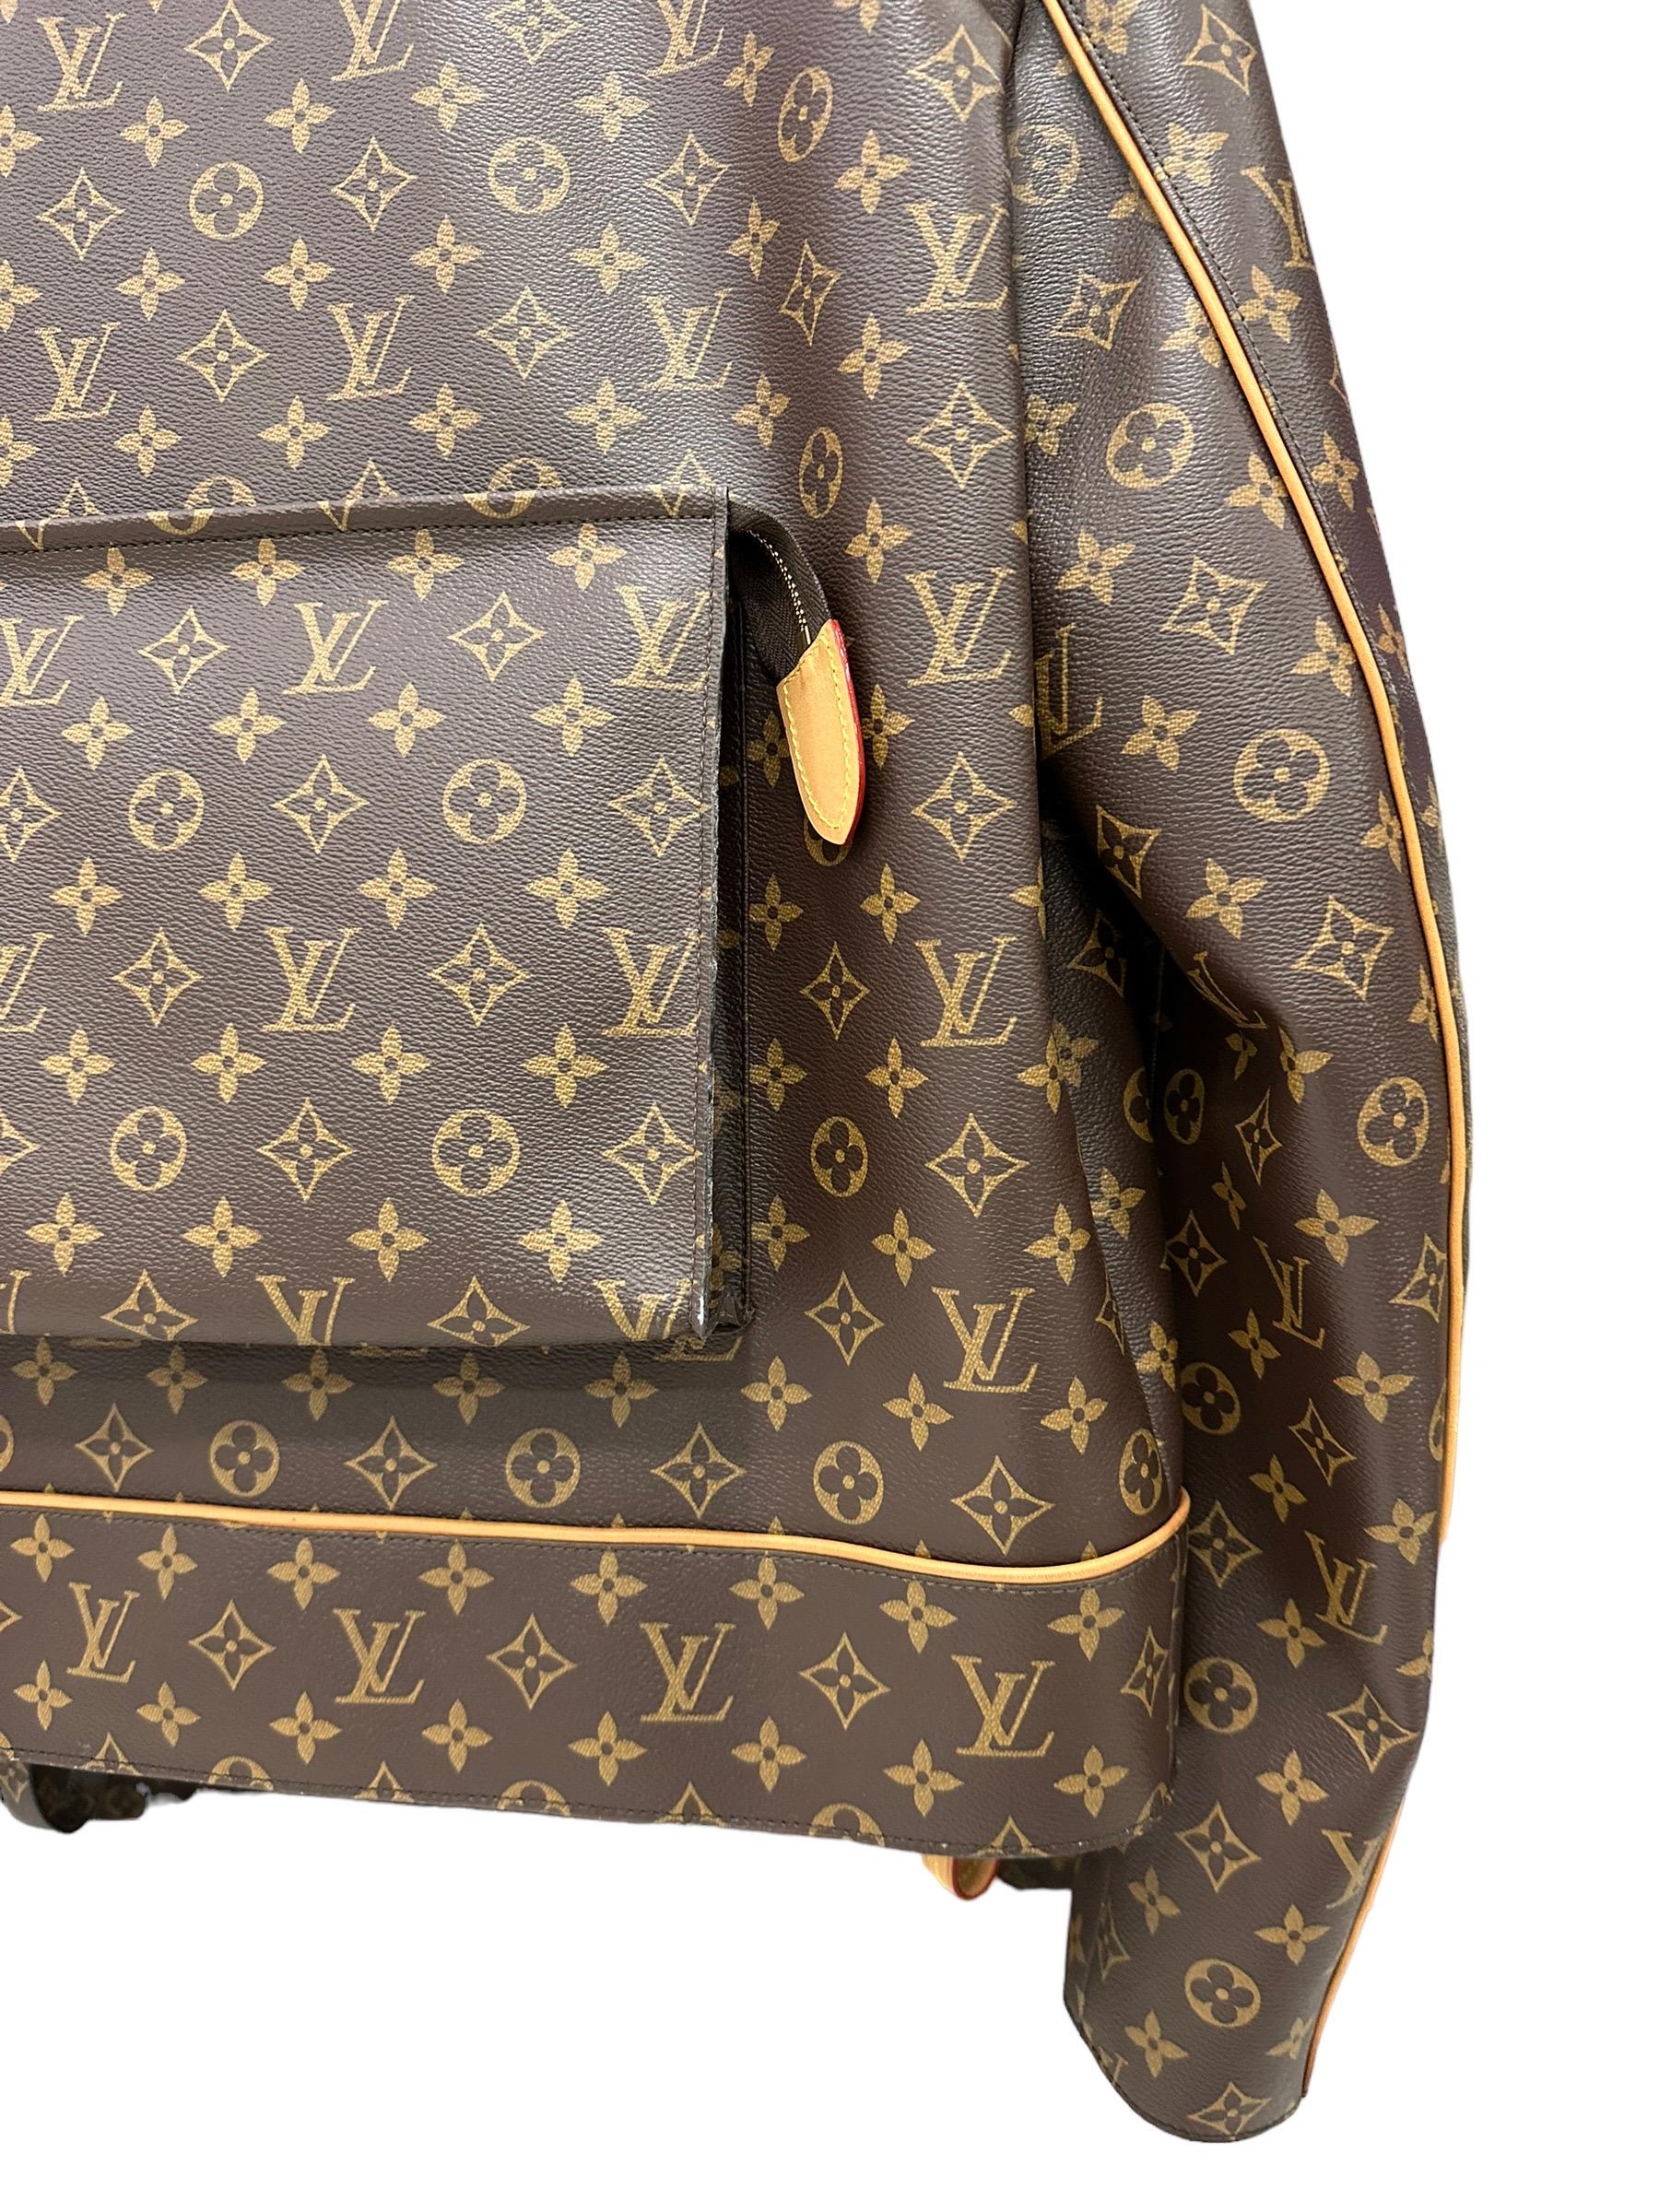 2019 Louis Vuitton Monogram Leather Men's Jacket Limited Edition For Sale 8